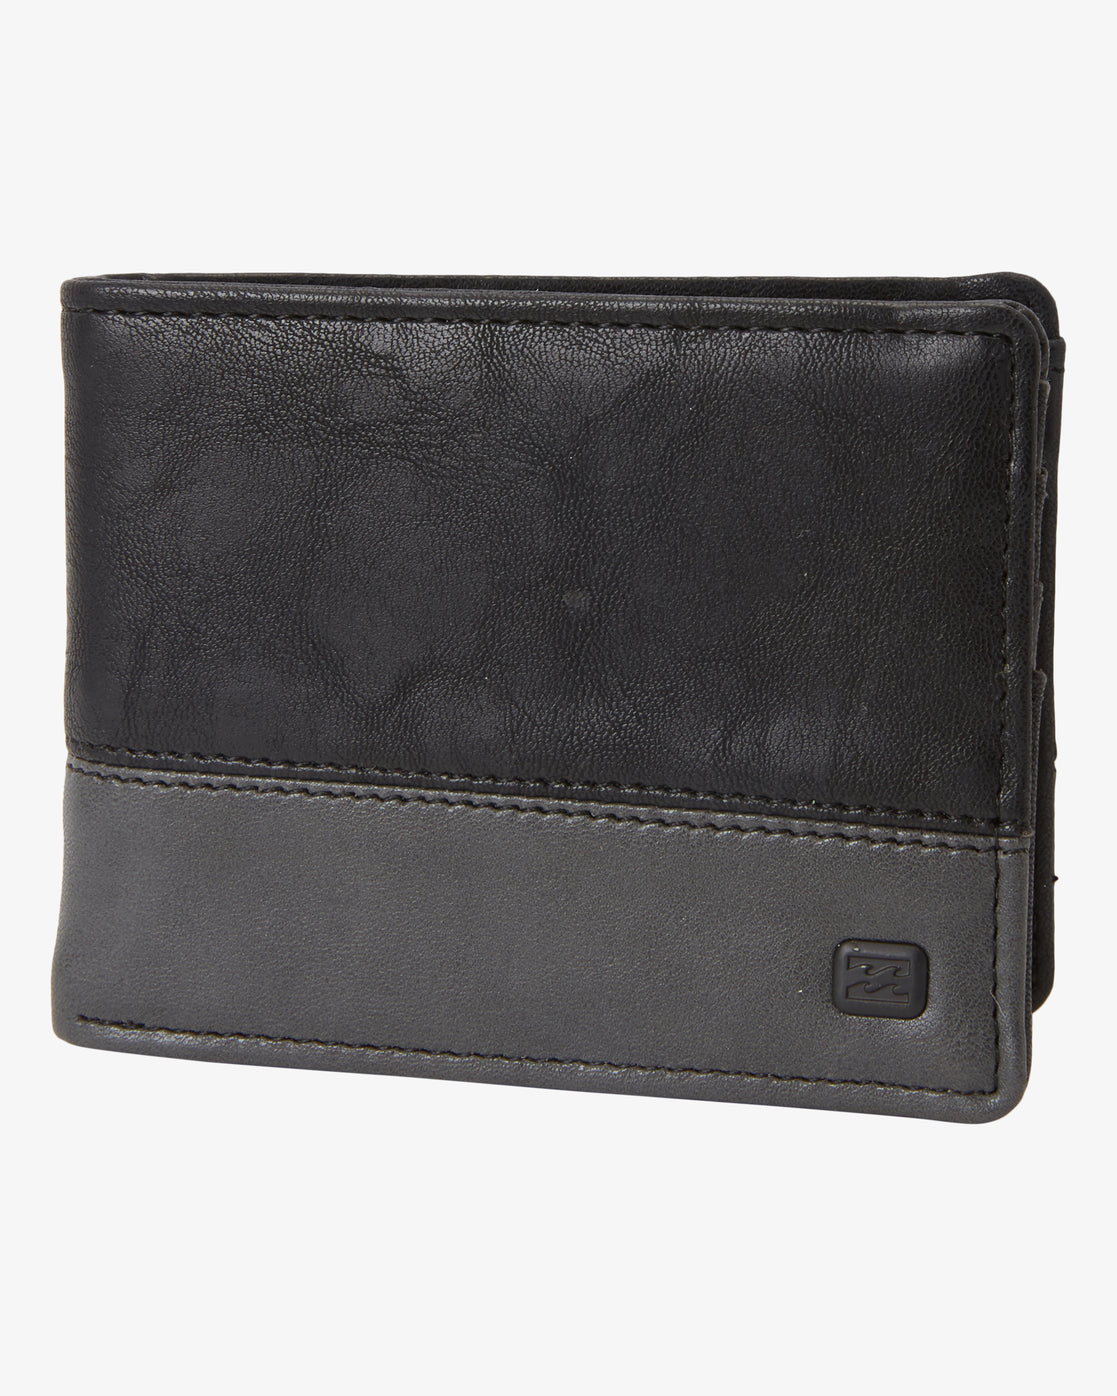 Billabong Dimension Bi-Fold Wallet BLACK CHAR